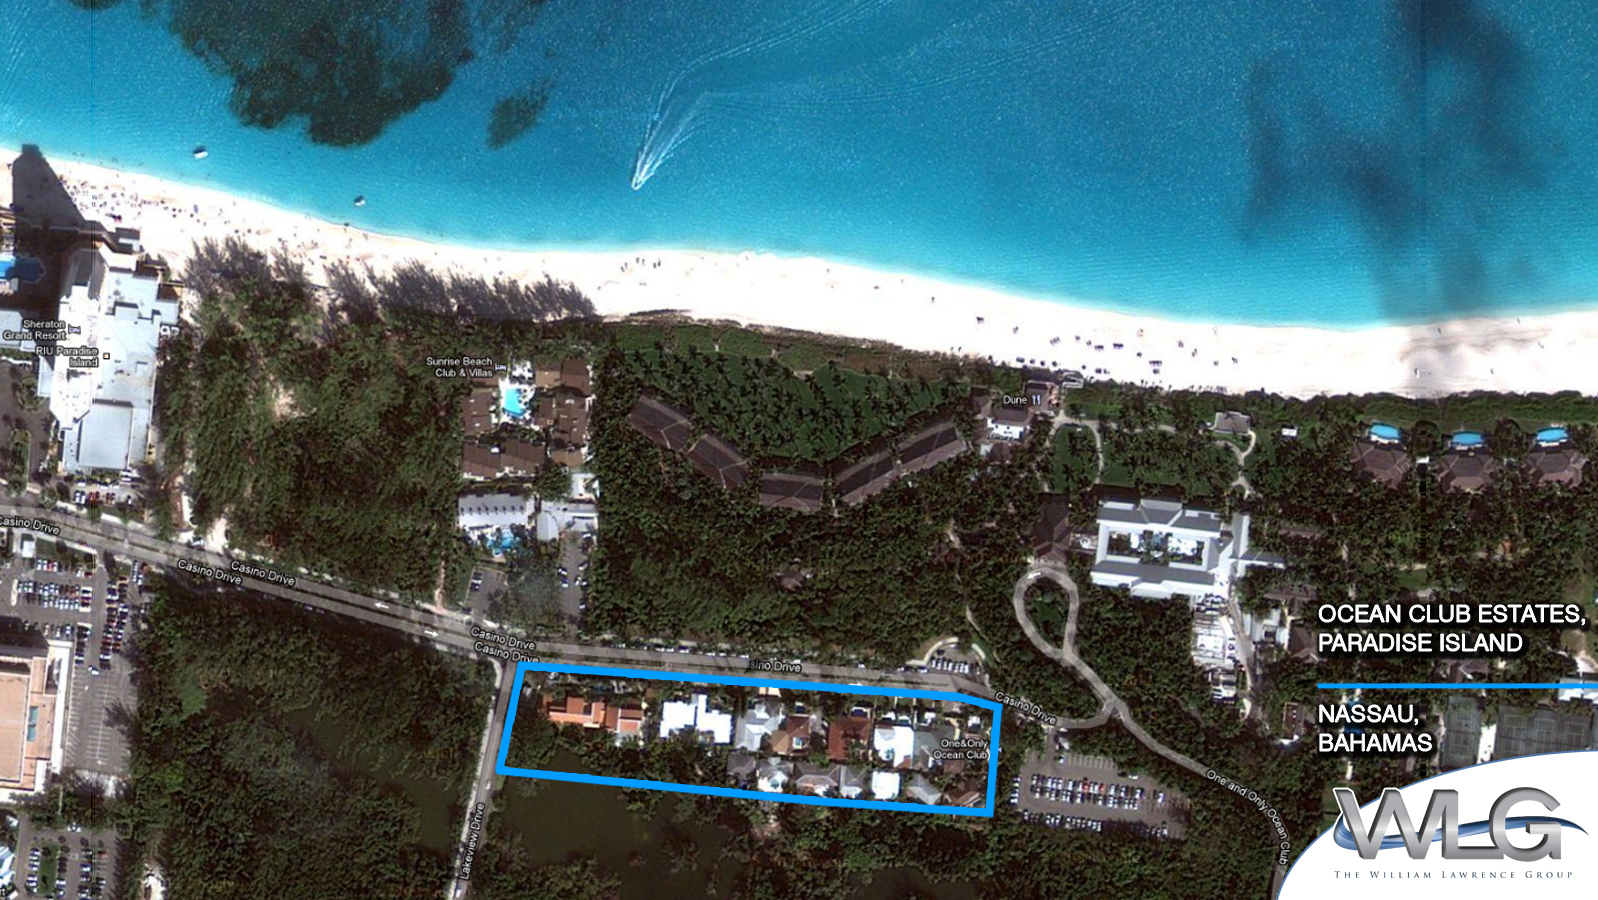 Ocean Club Estates Paradise Island.jpg